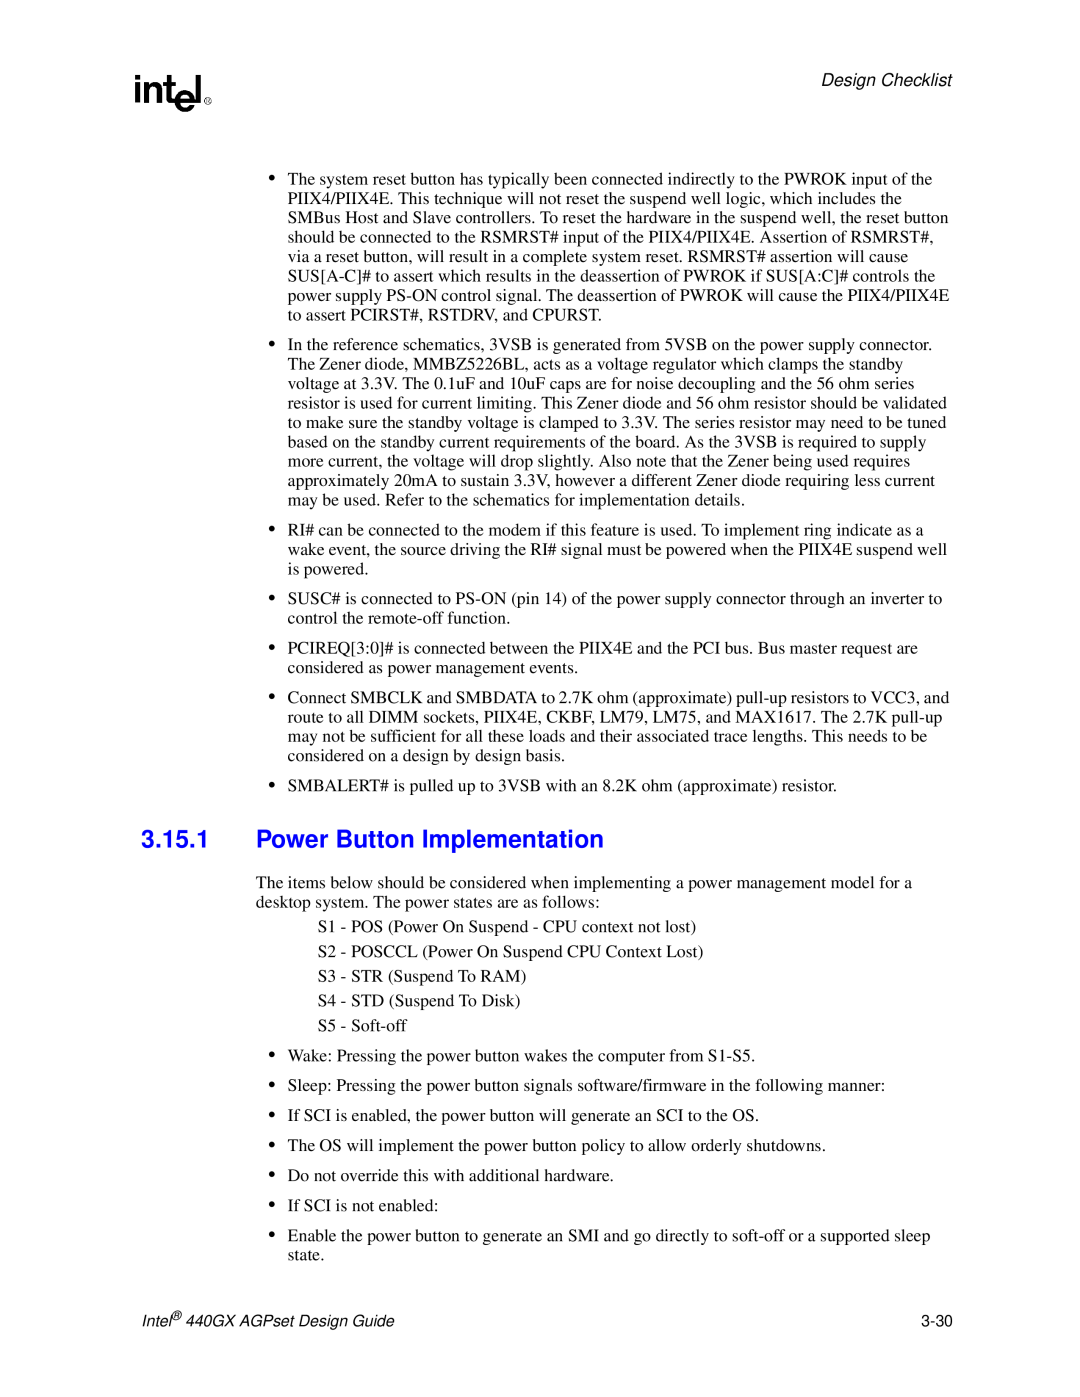 Intel 440GX manual Power Button Implementation, Design Checklist 